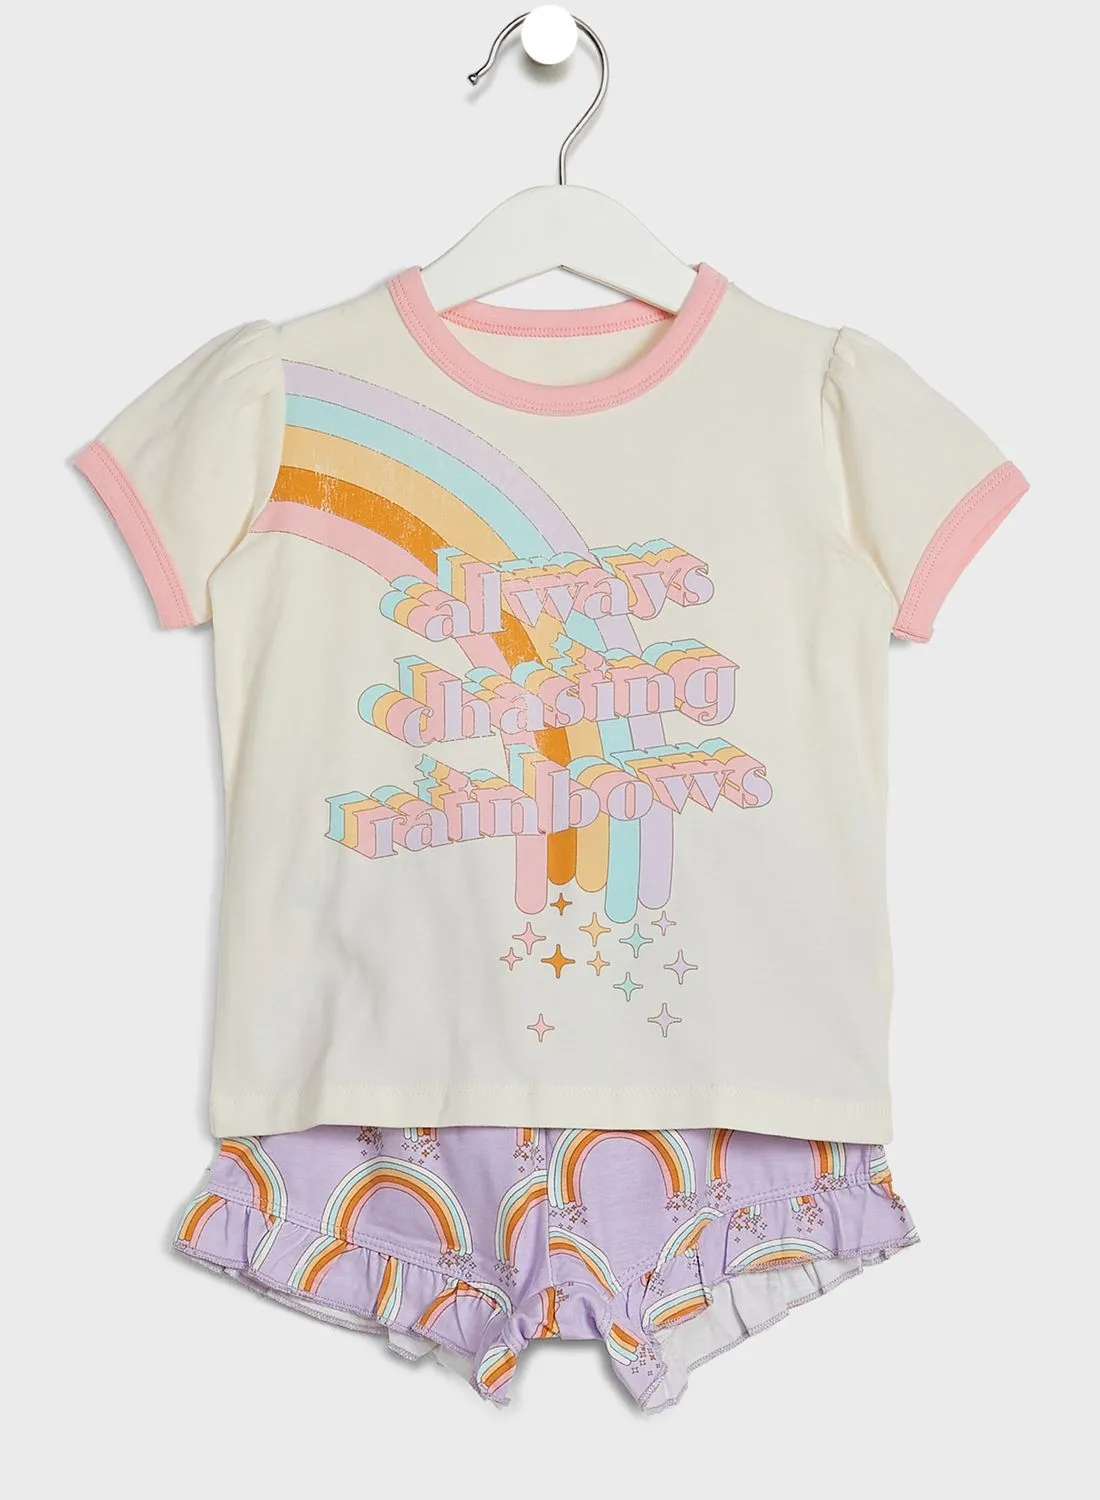 Cotton On Kids Rainbow Pyjama Set